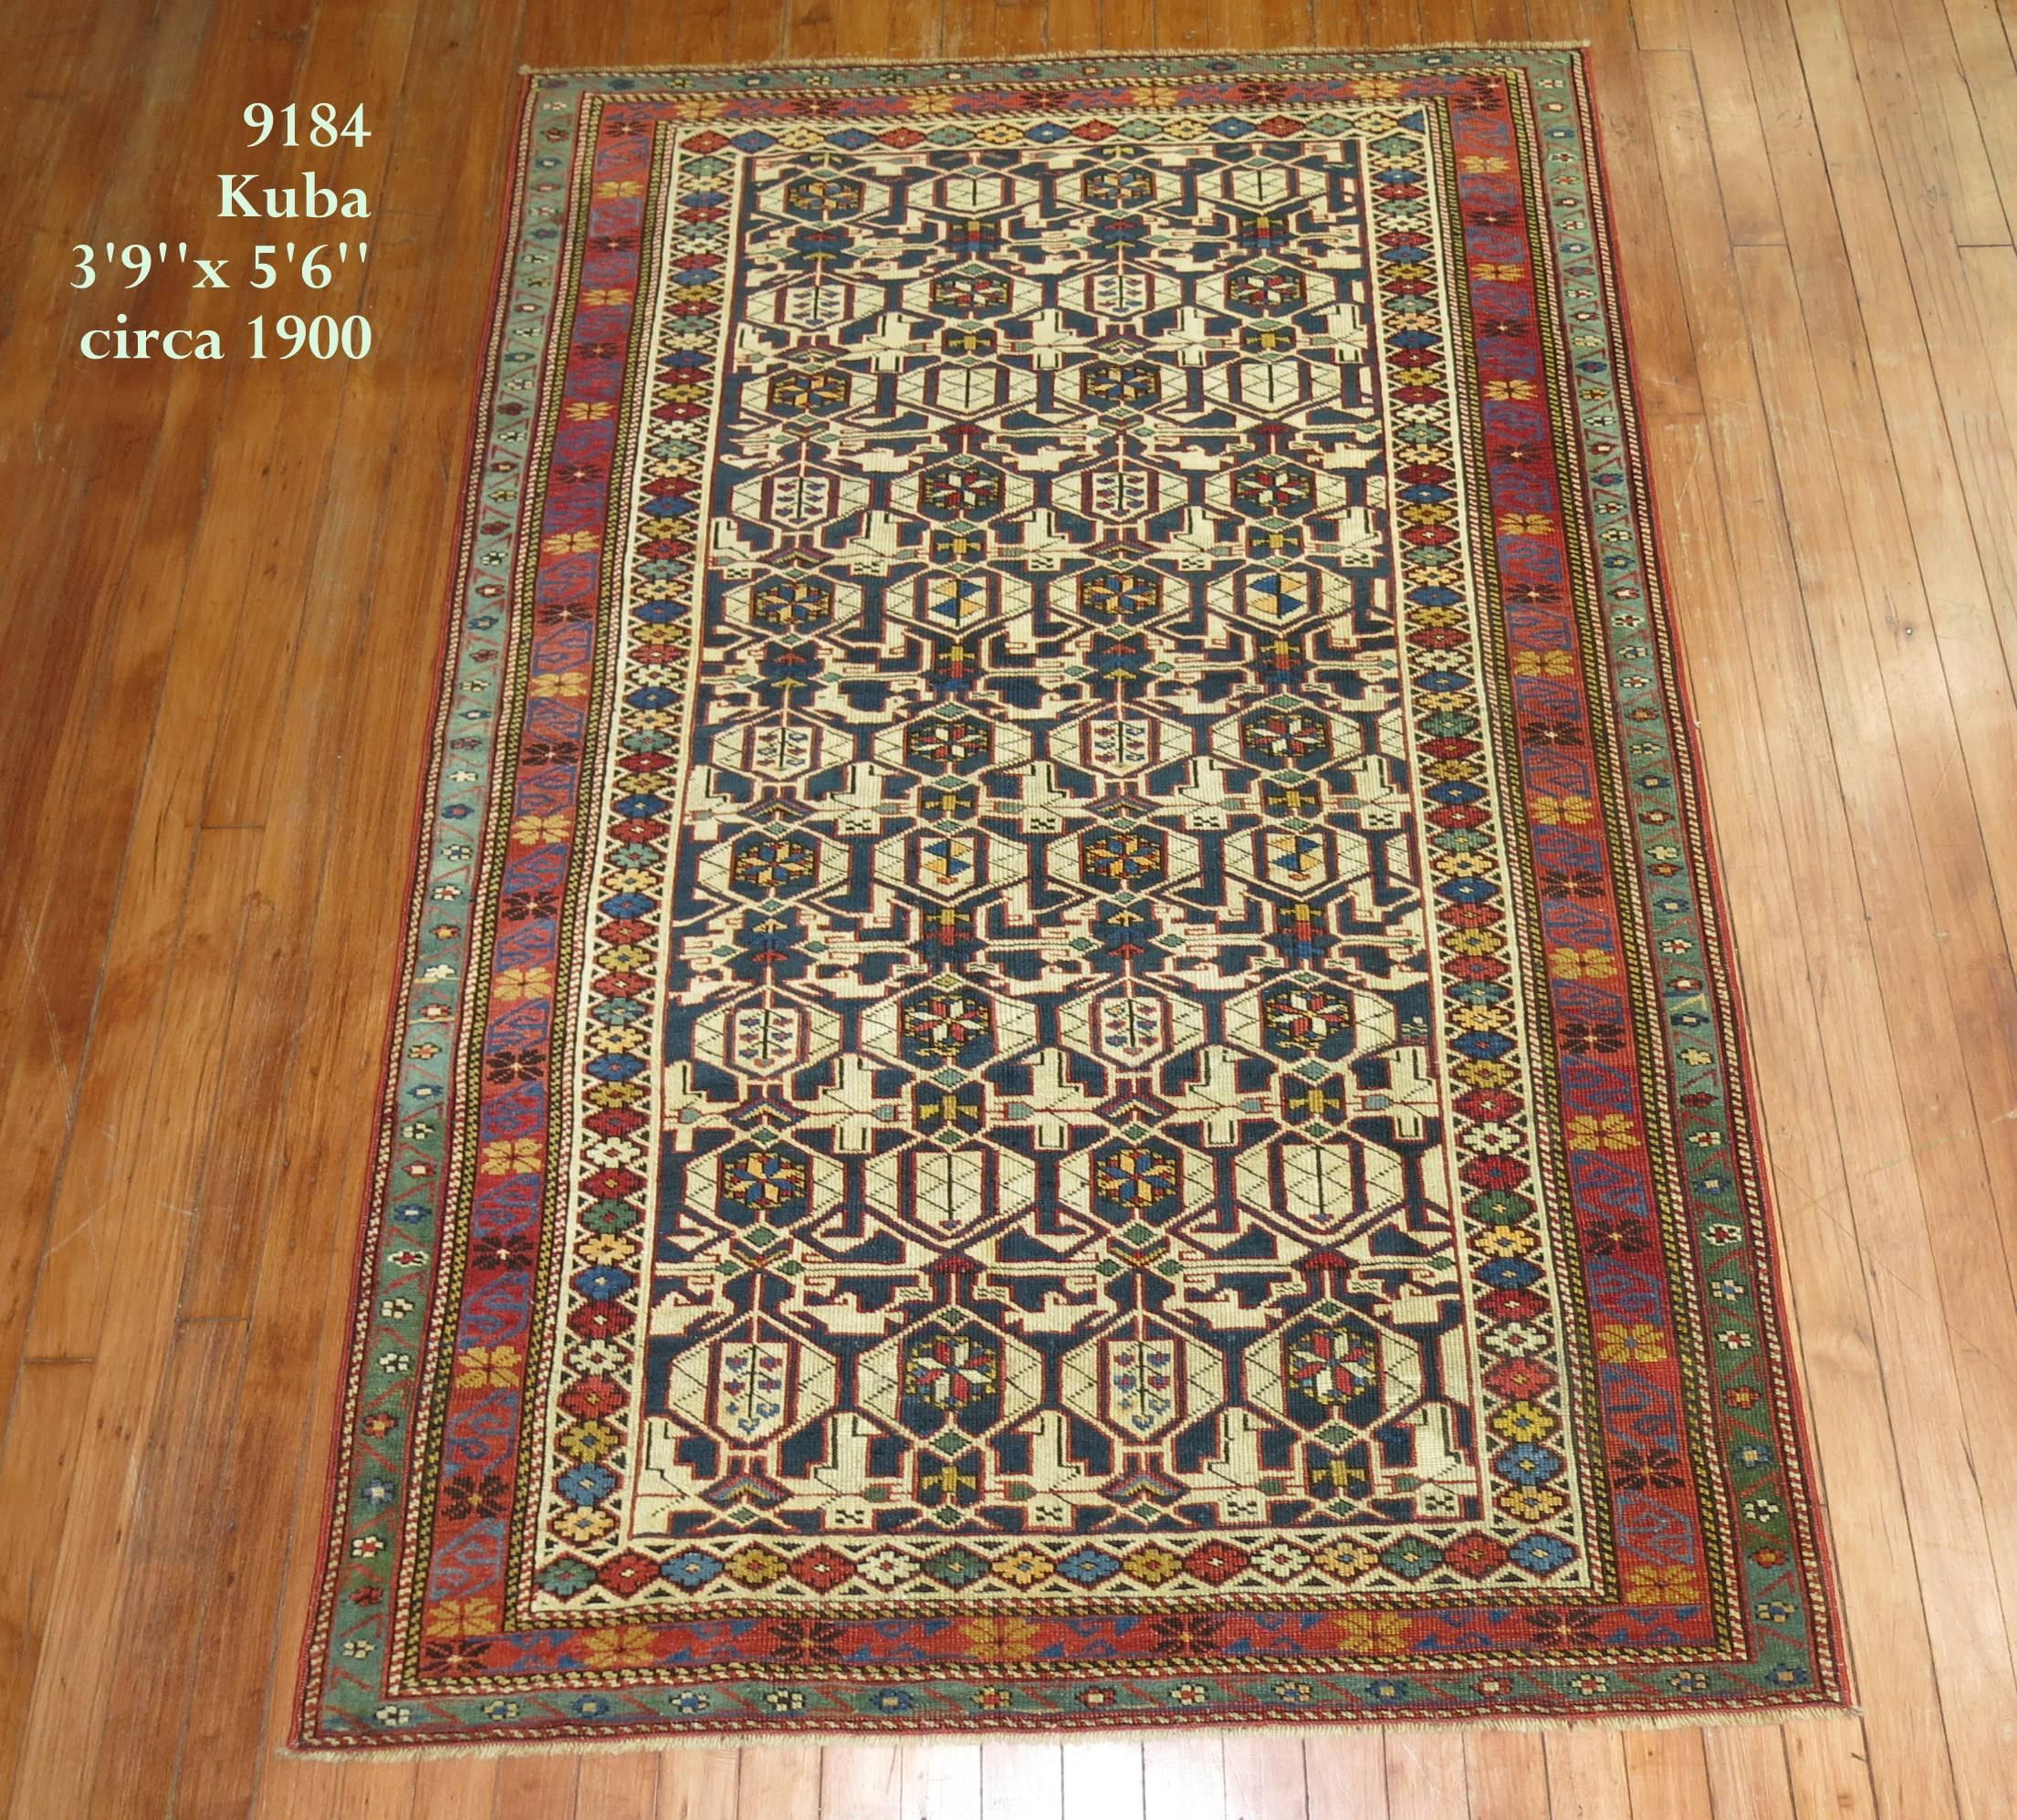 An early 20th century decorative Caucasian Kuba rug.